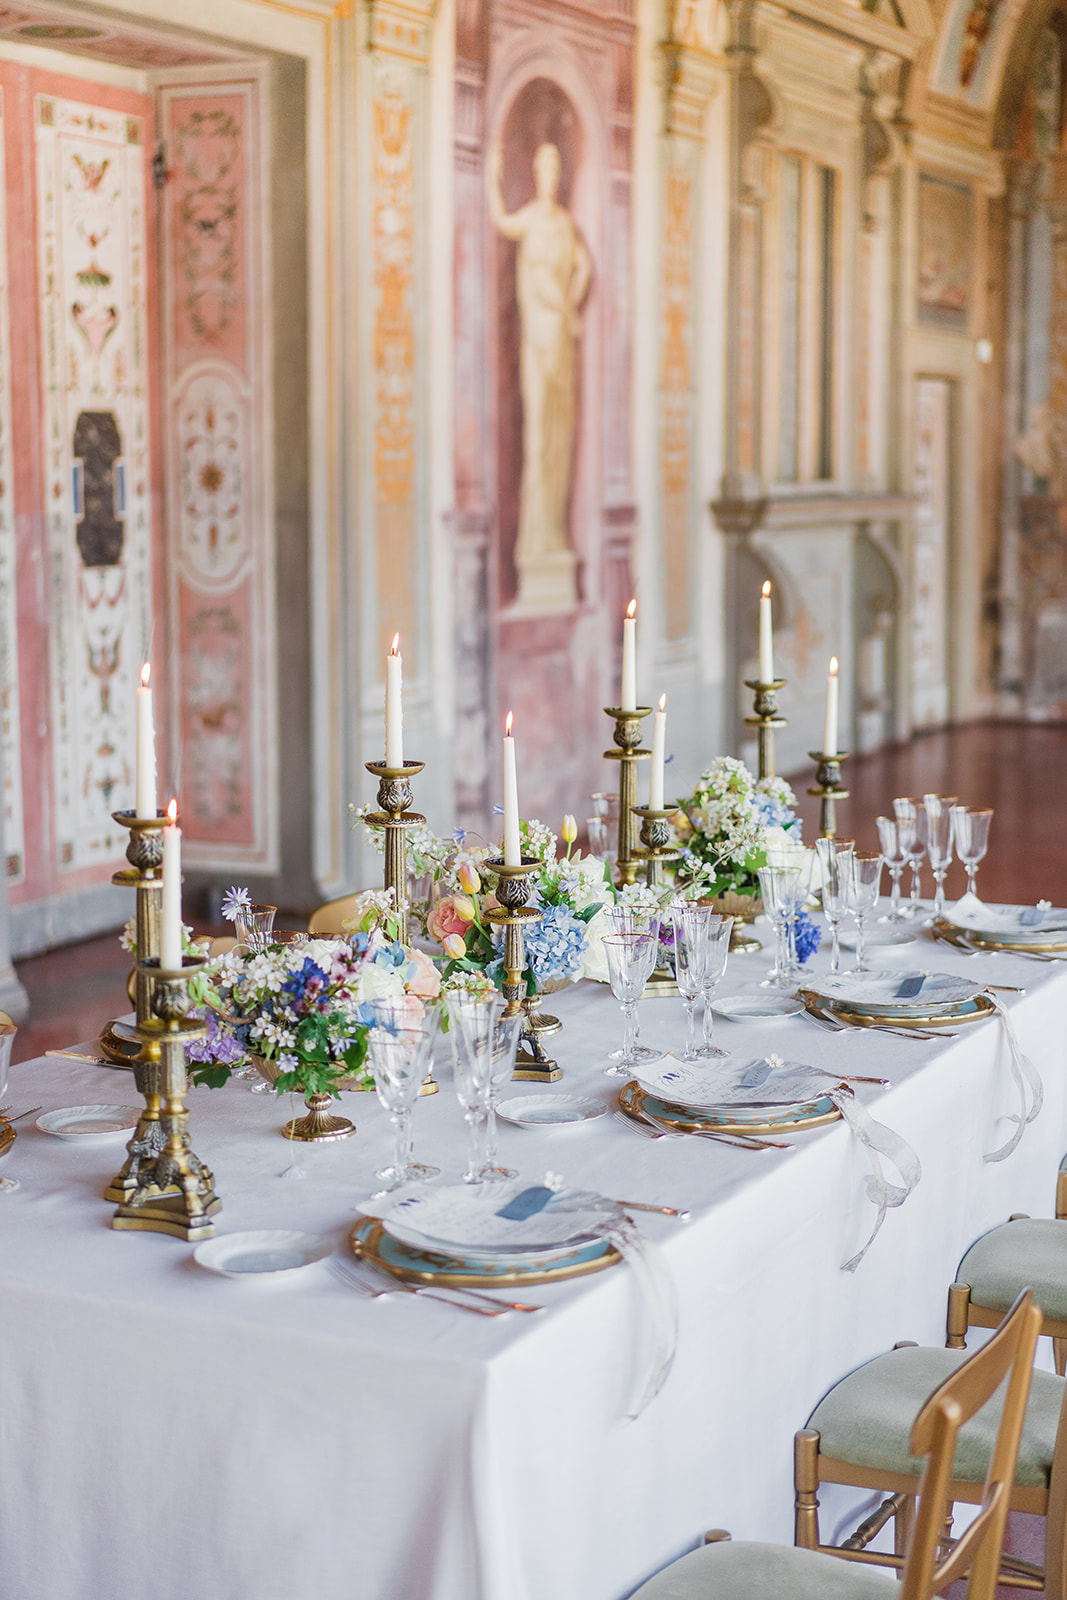 Bridgerton inspired wedding in Tuscany